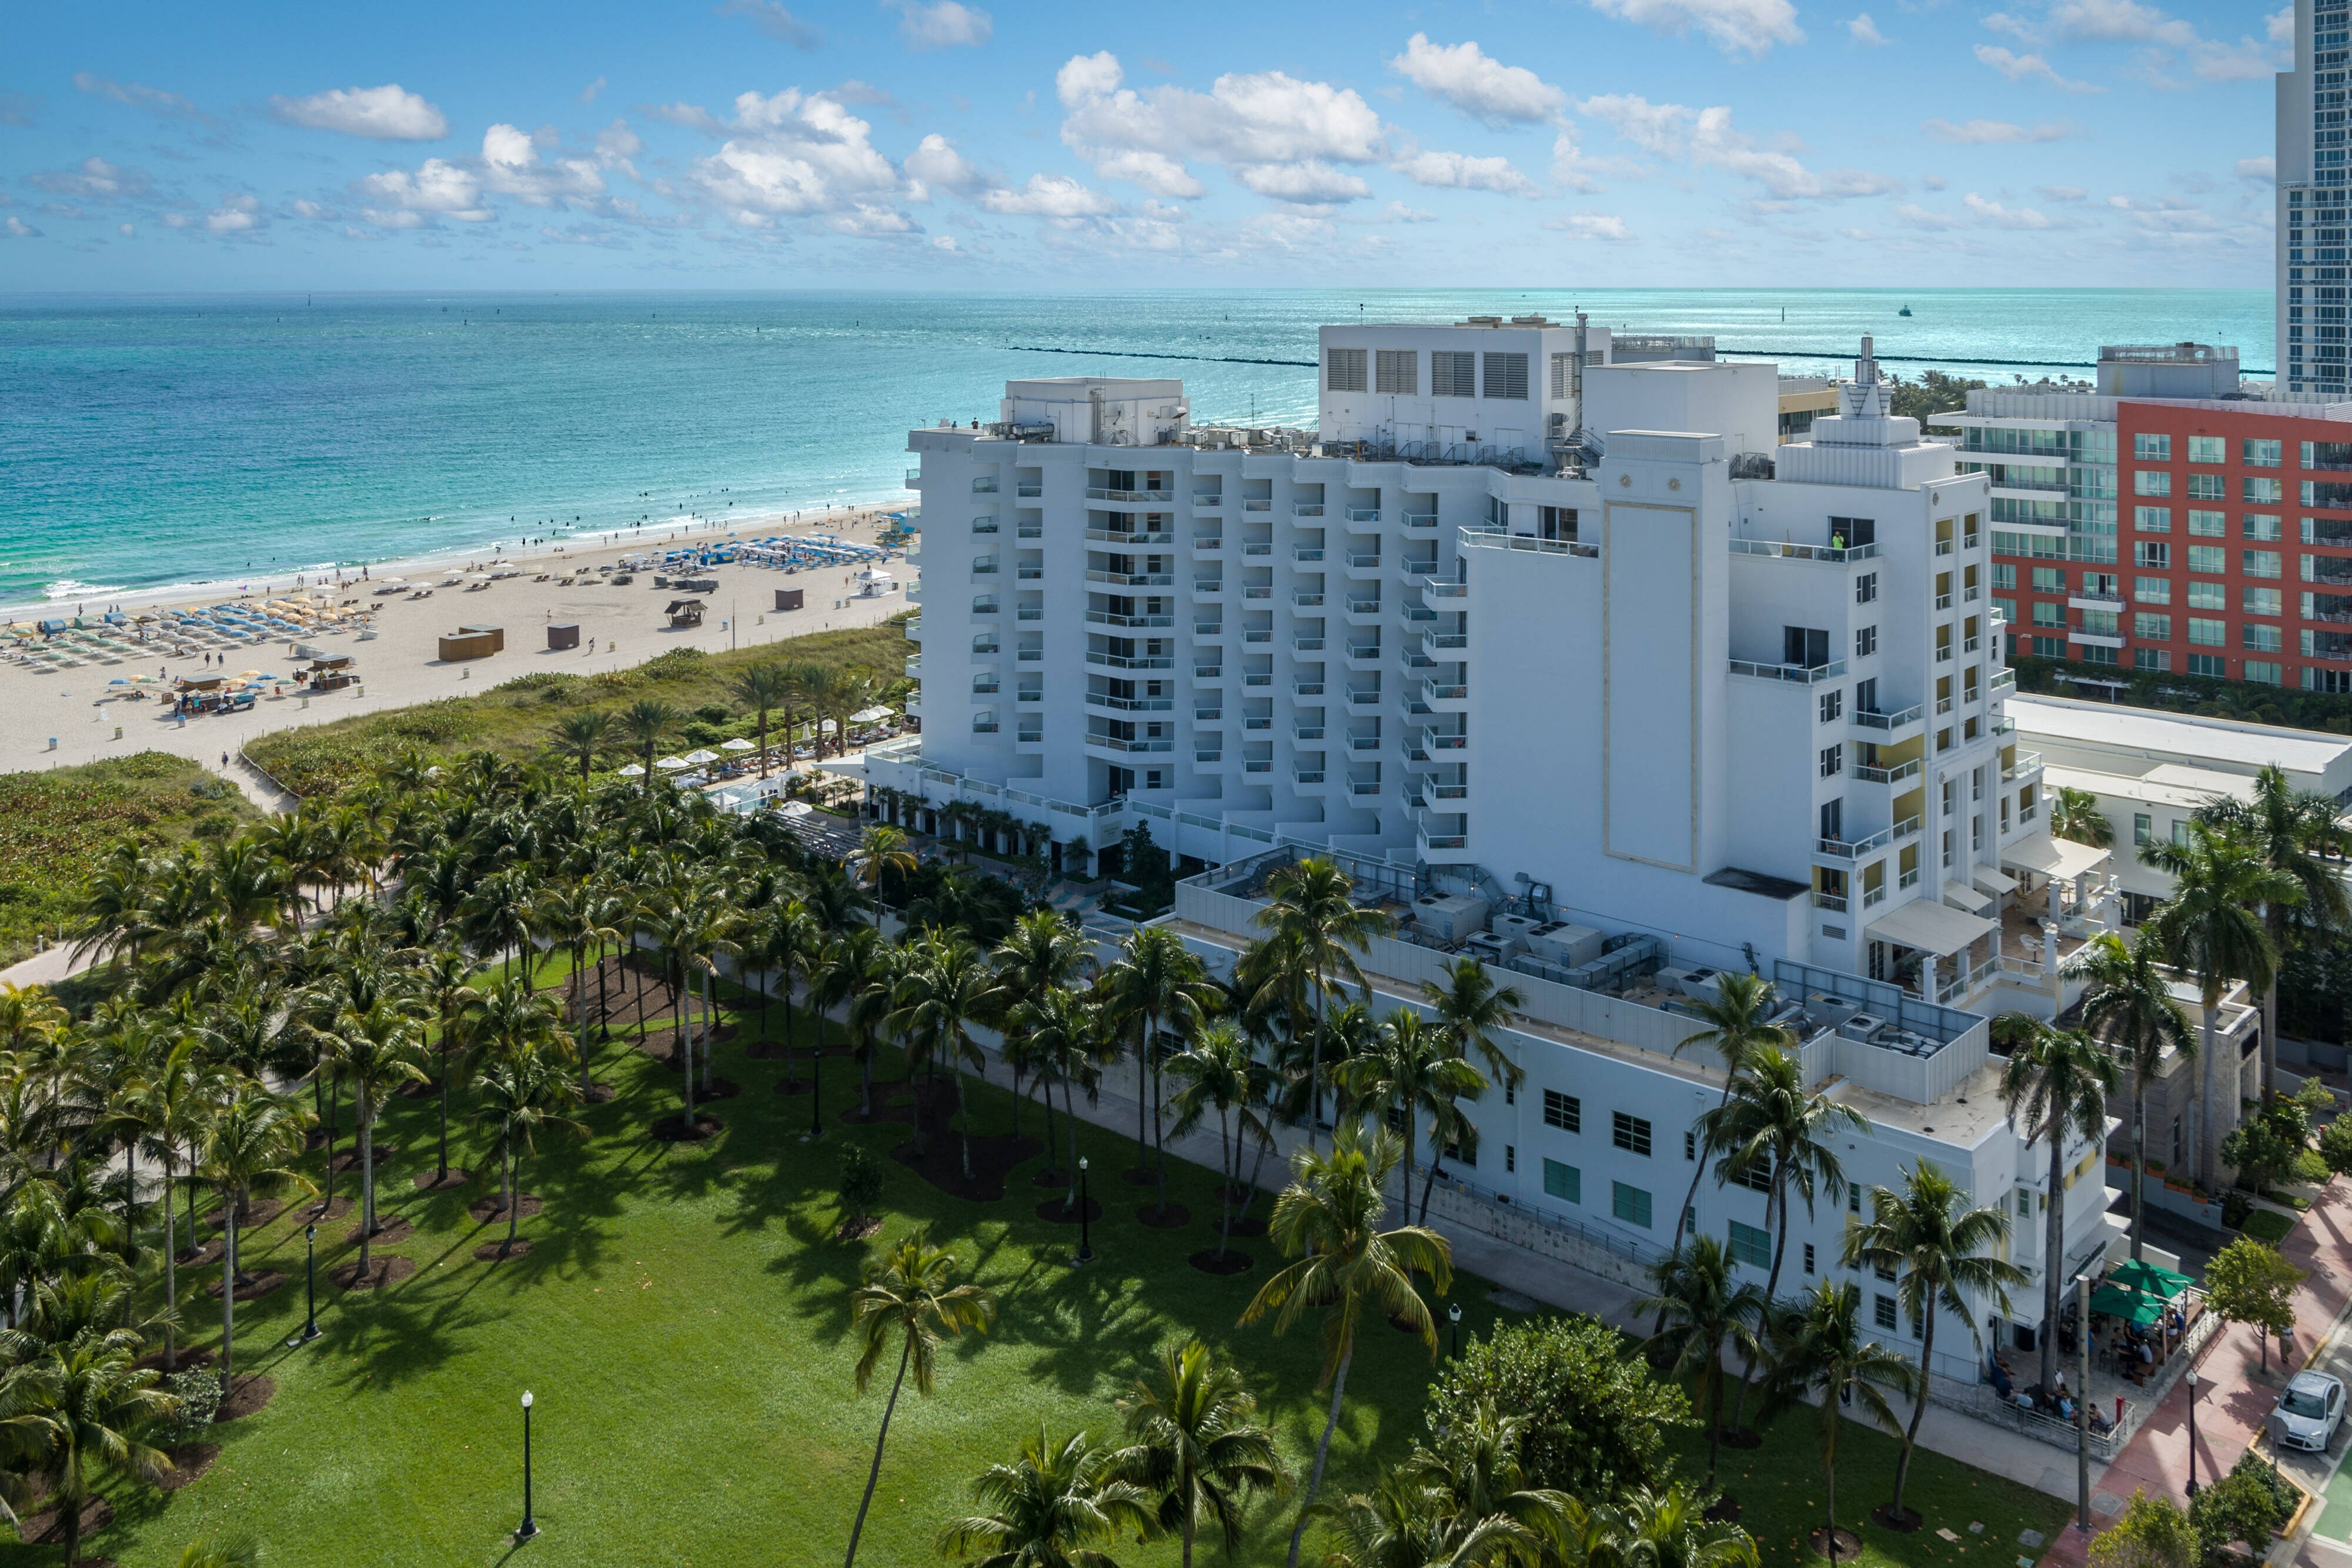 Photo of Marriott Stanton South Beach, Miami Beach, FL